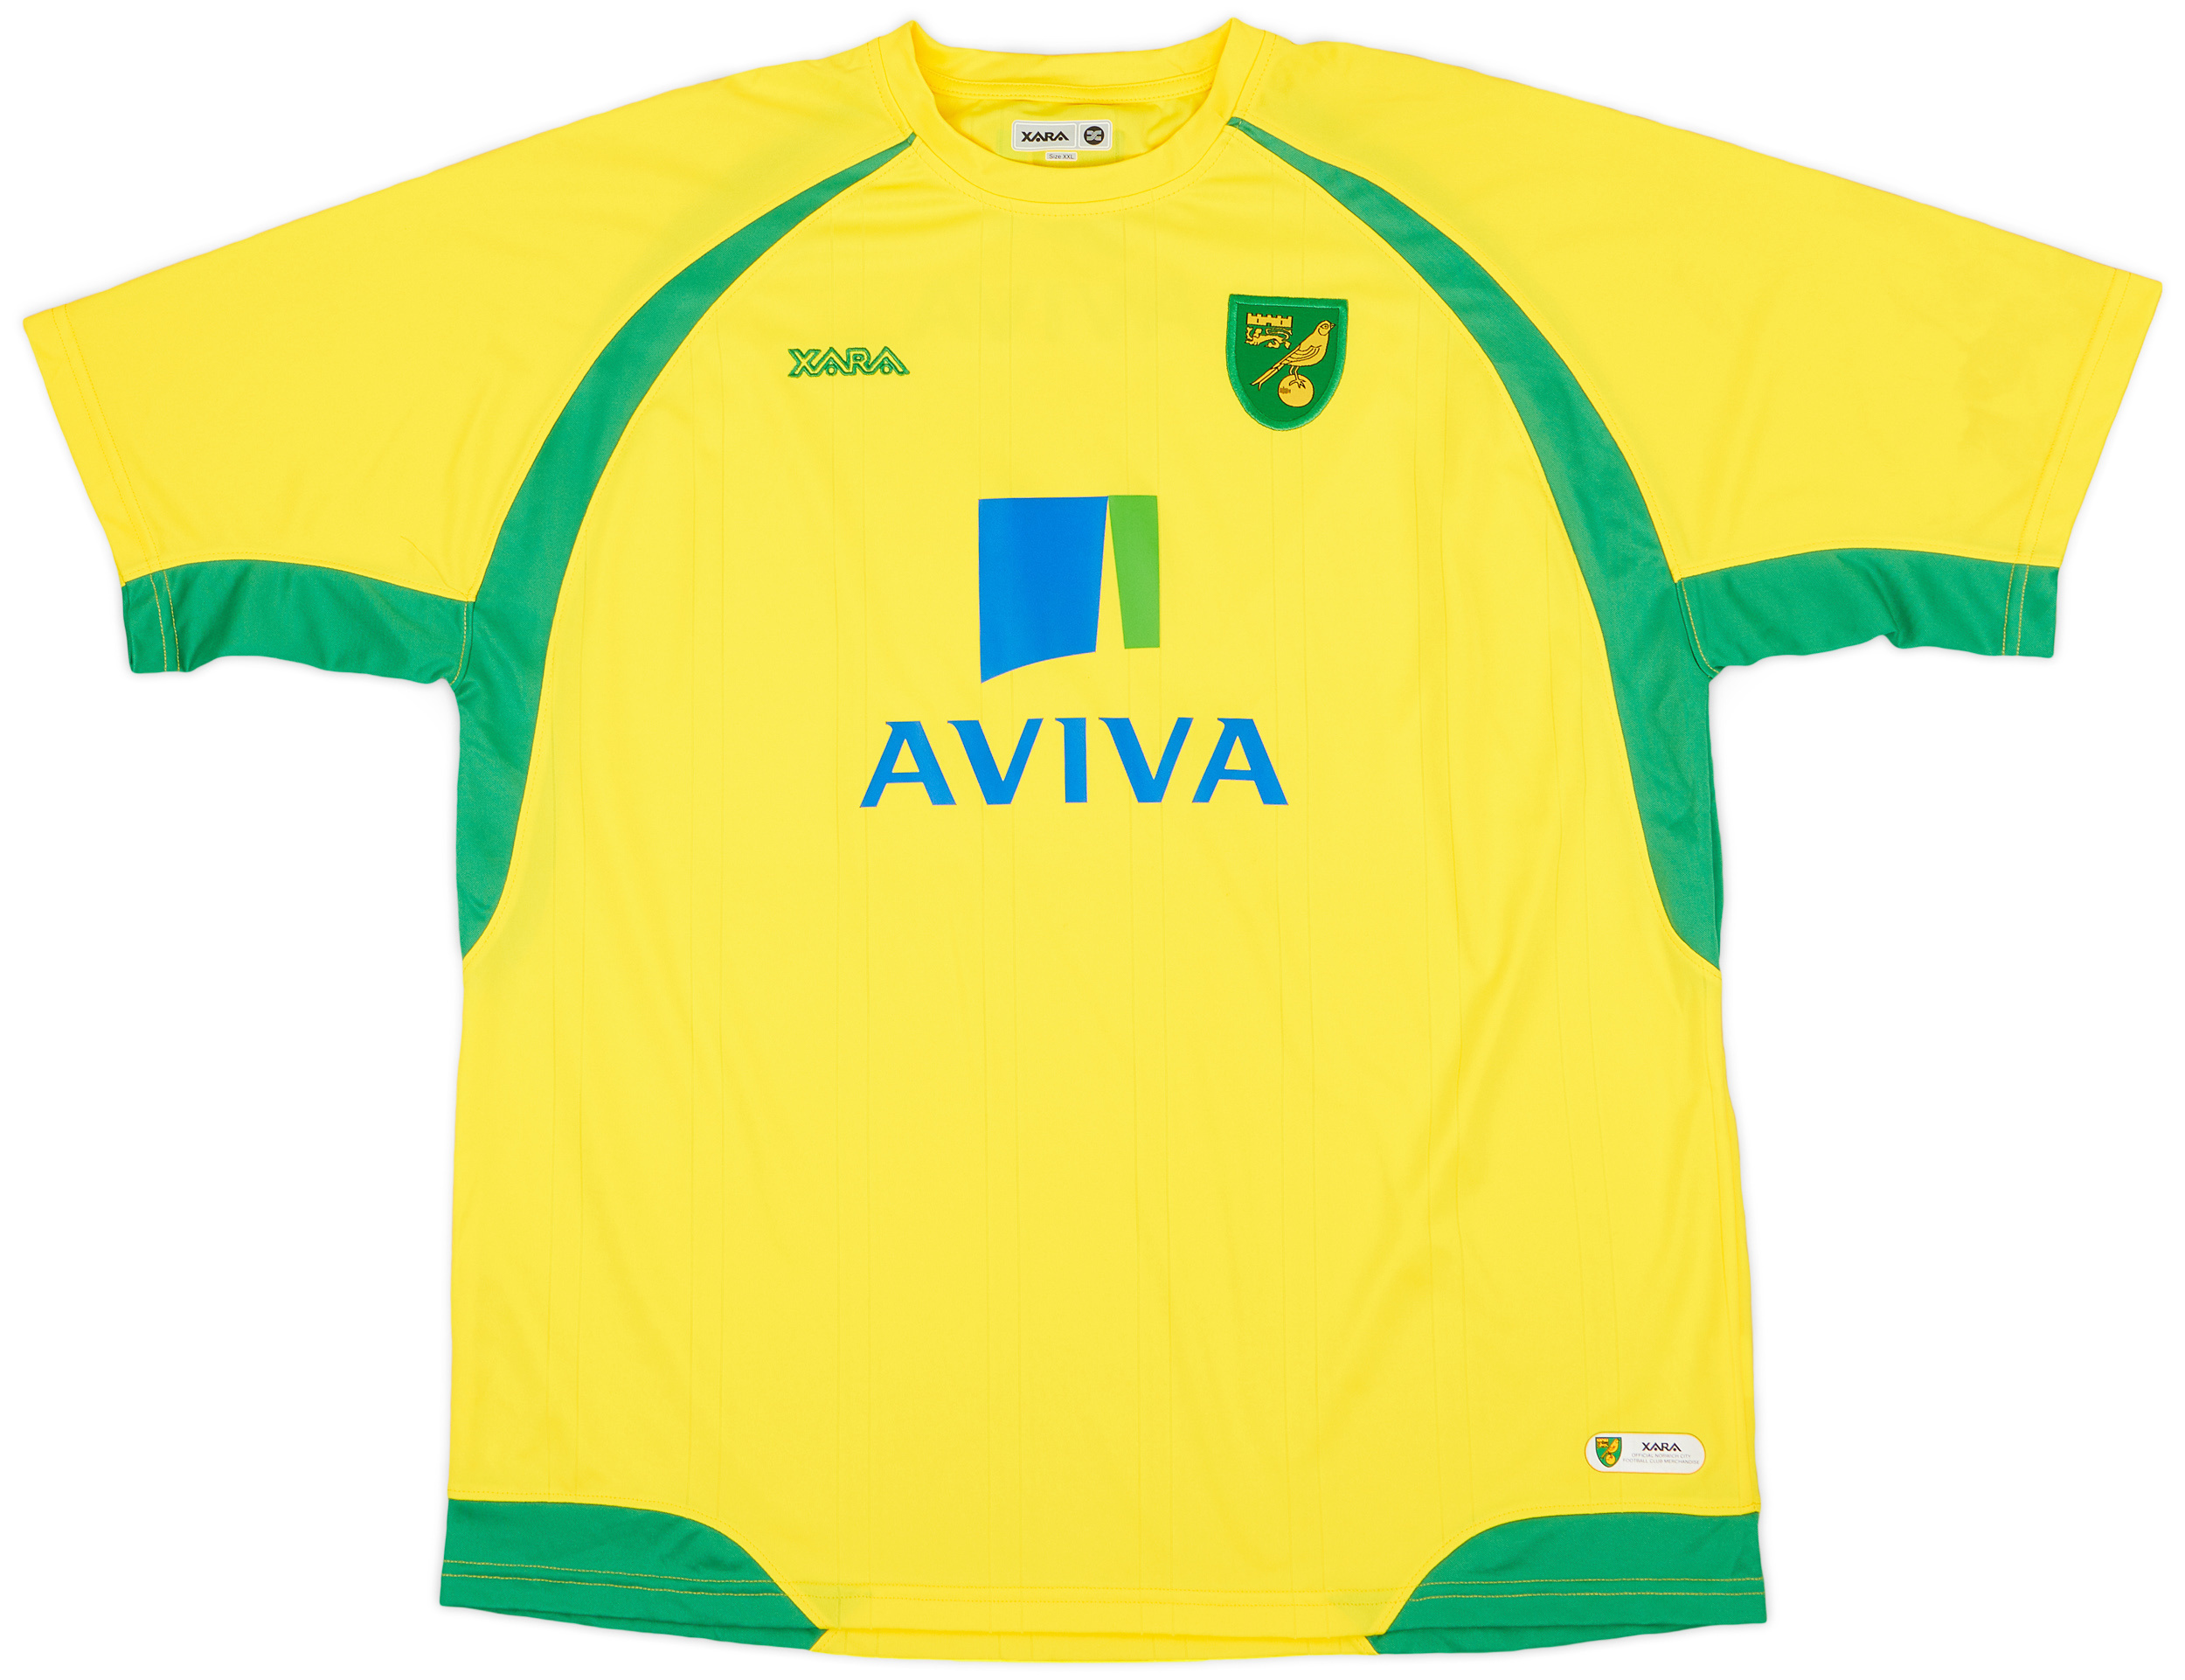 2010-11 Norwich City Home Shirt - 10/10 - ()